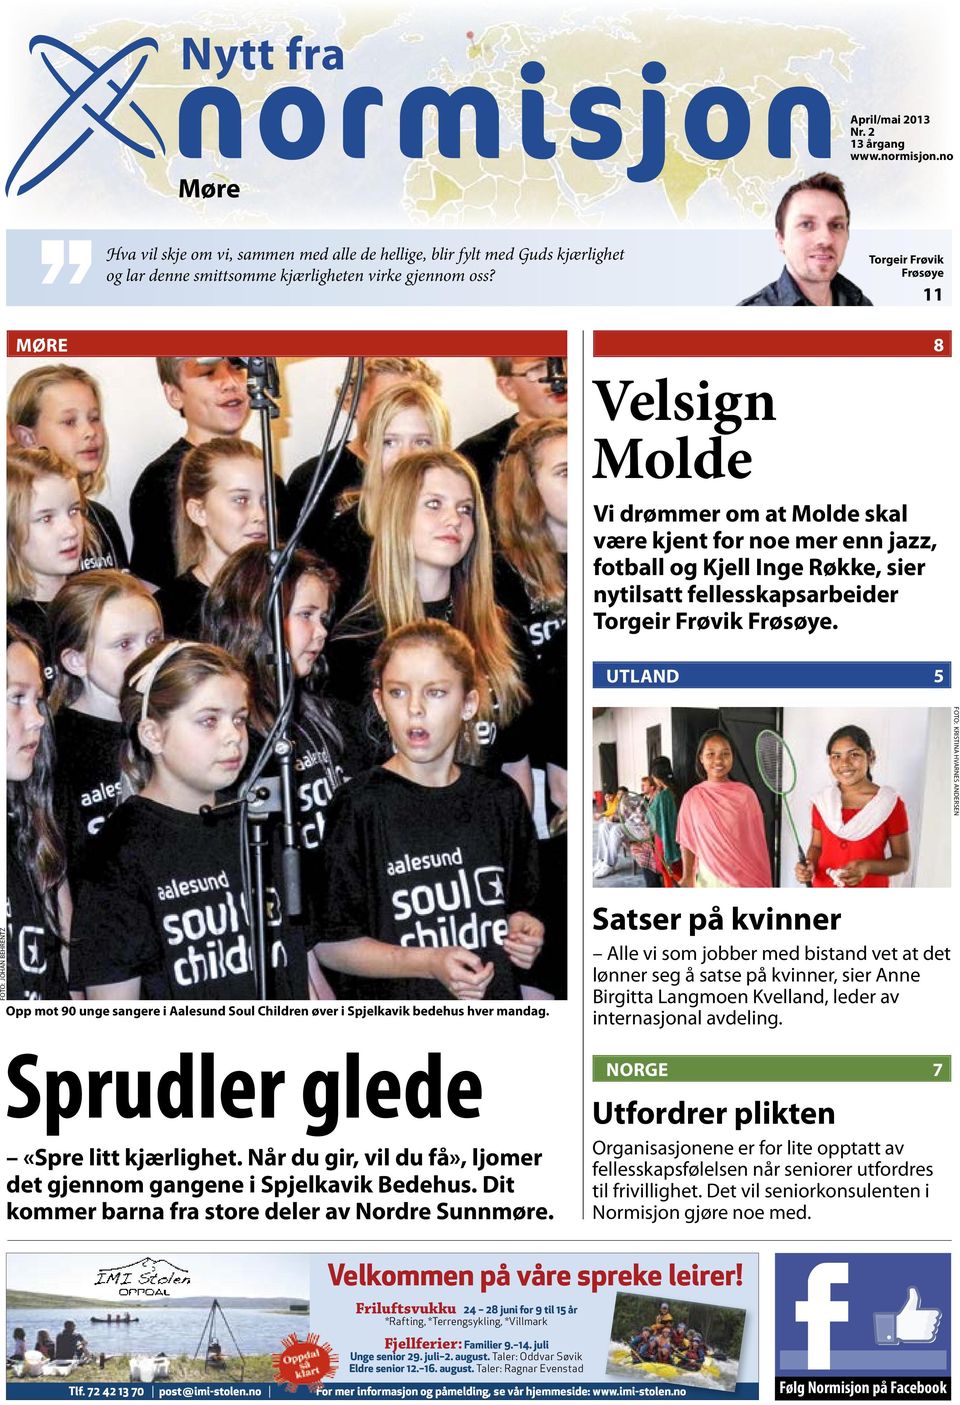 utland 5 Kristina Hvarnes Andersen johan behrentz Opp mot 90 unge sangere i Aalesund Soul Children øver i Spjelkavik bedehus hver mandag.